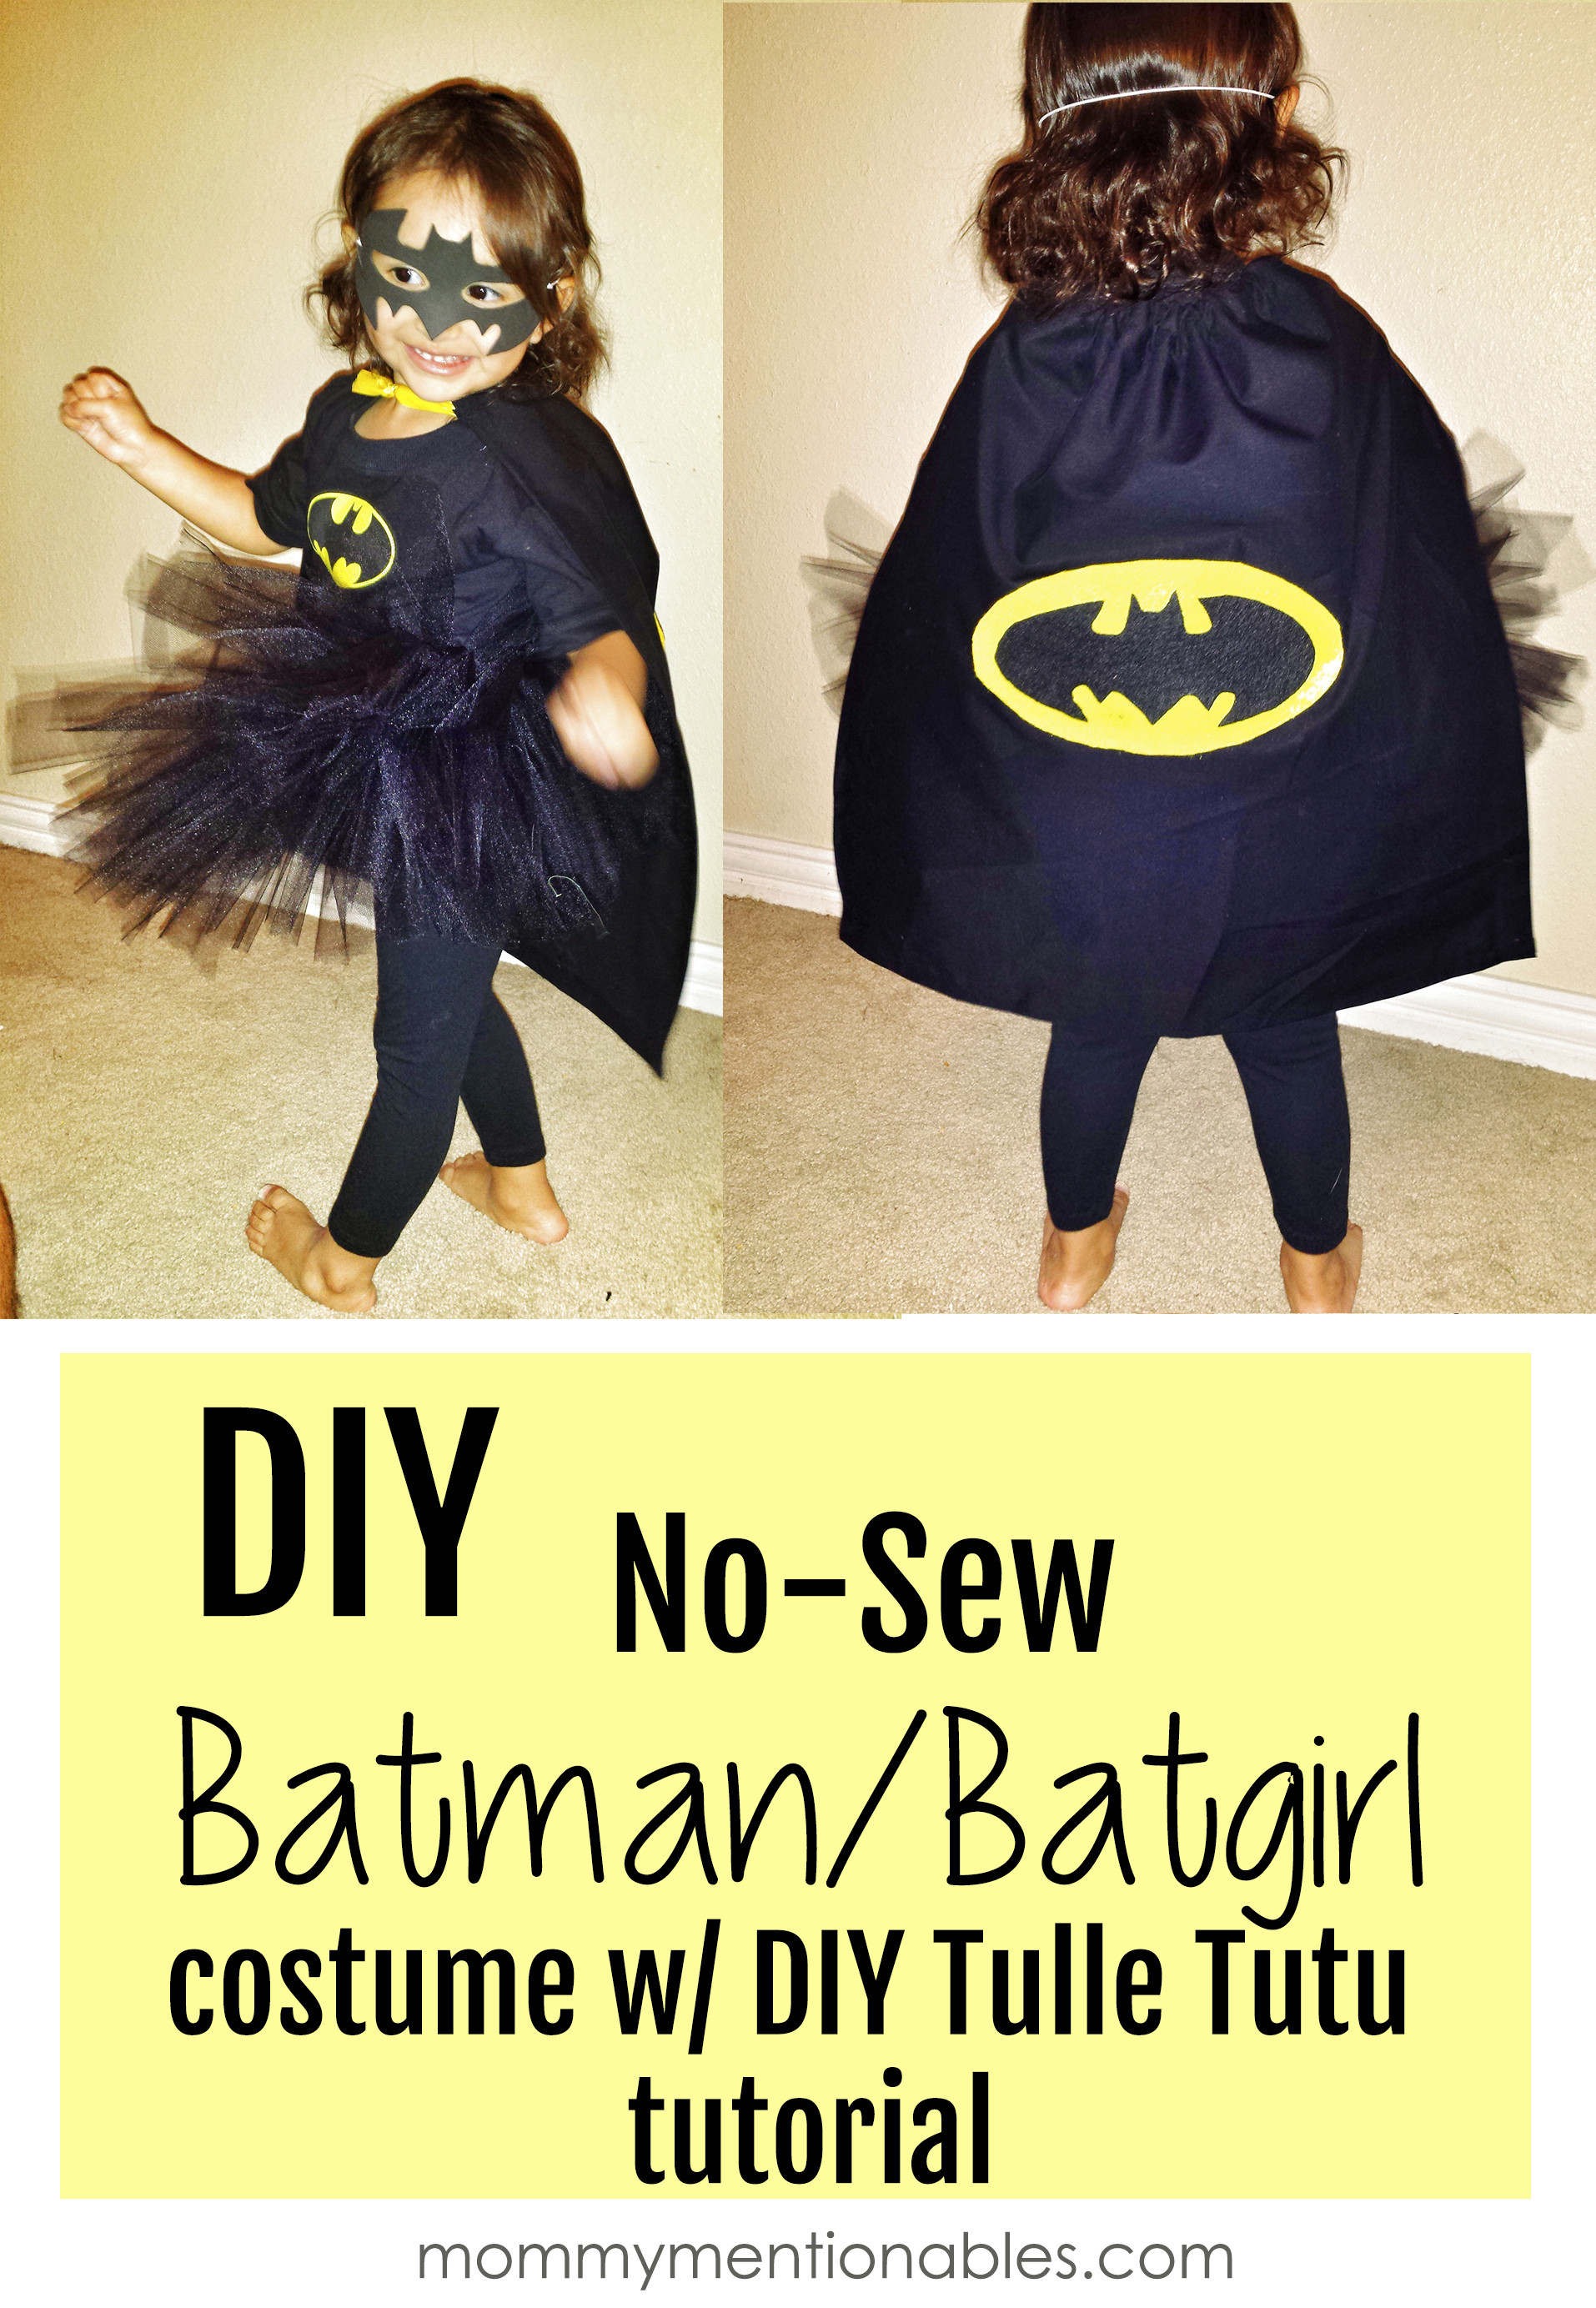 Best ideas about DIY Batgirl Costume
. Save or Pin DIY No Sew Batman Batgirl Costume Now.